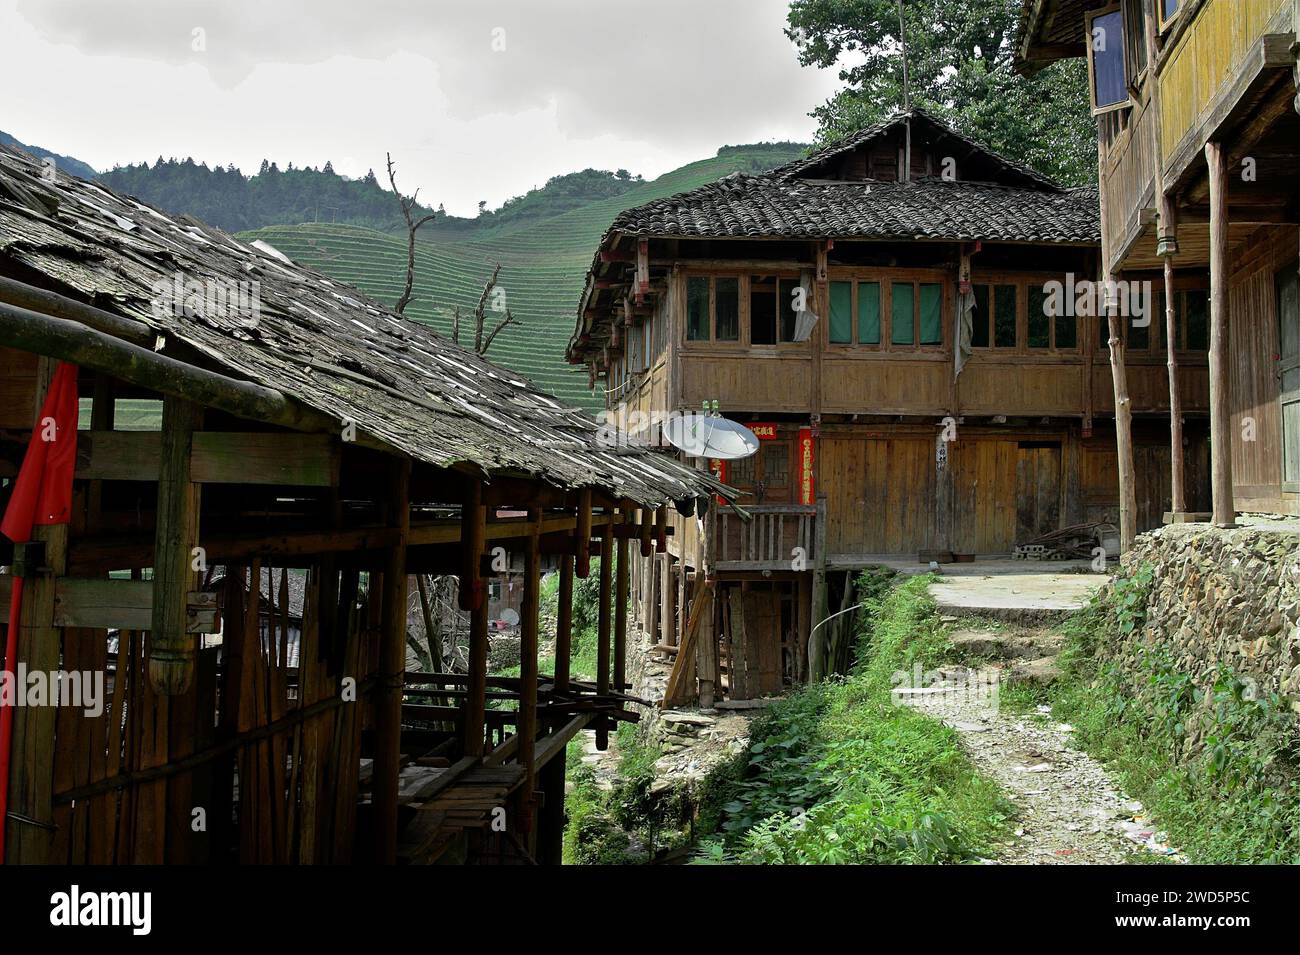 龙胜镇 (龙胜县) 中國 Longsheng, Dazhai Longji Ping'an Zhuang, China; wooden houses in a mountain chinese village; Holzhäuser in einem chinesischen Bergdorf Stock Photo